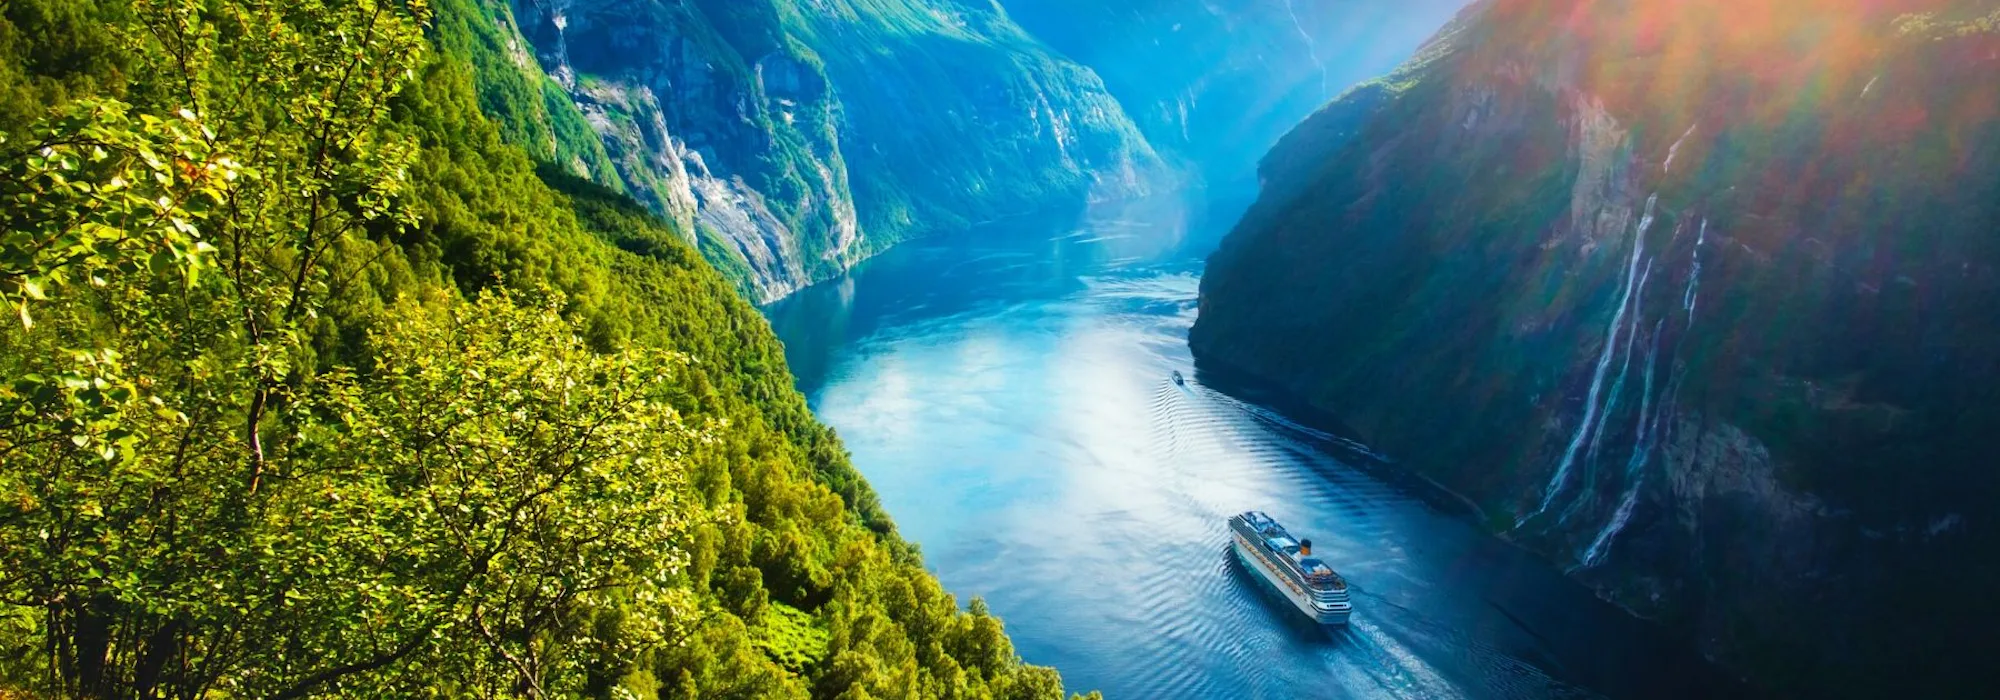 Costa Cruises - De norske fjorde